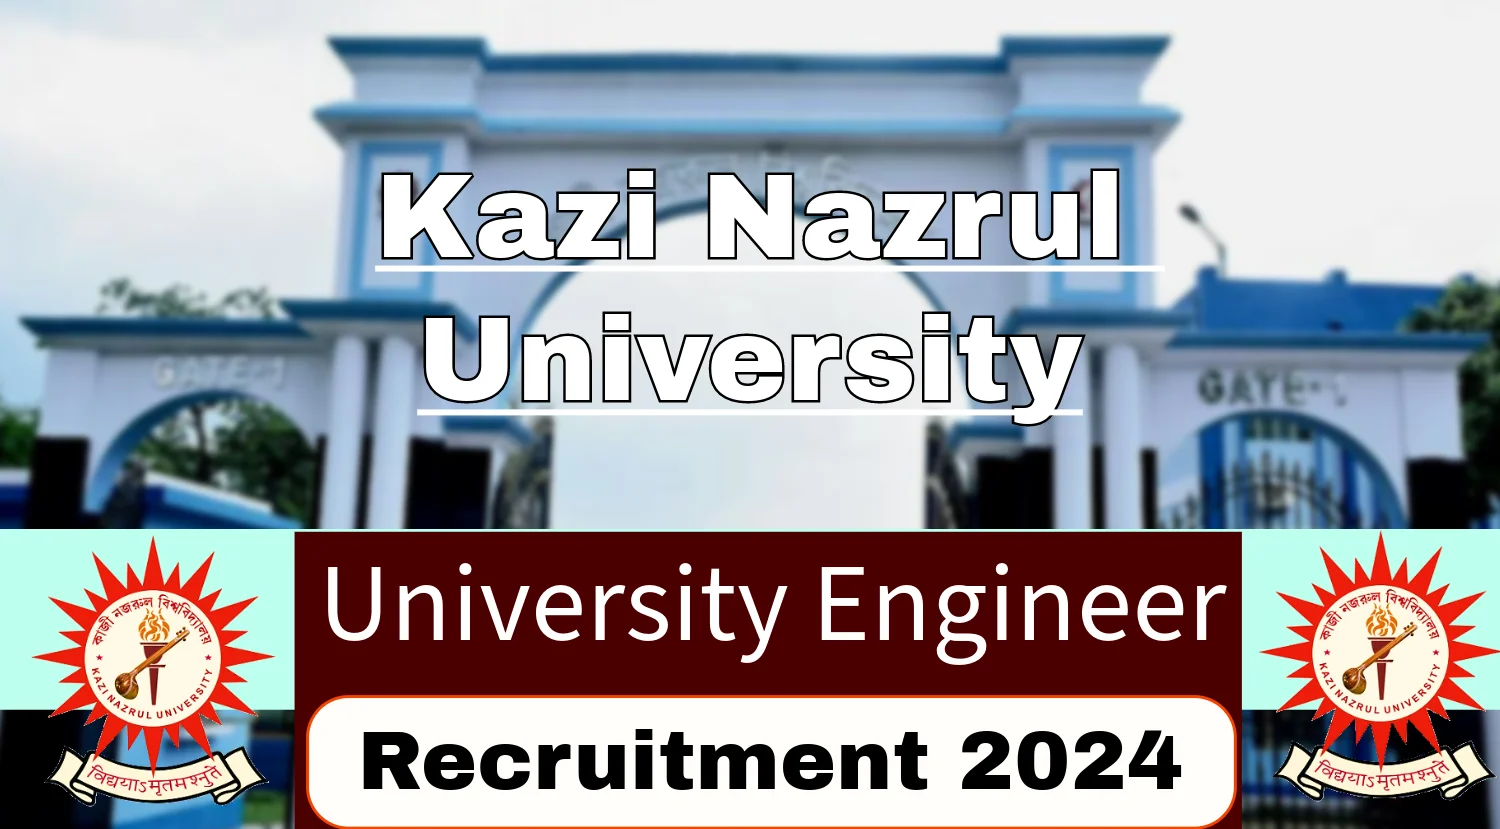 Kazi Nazrul University Engineer Recruitment 2024 Notification Out